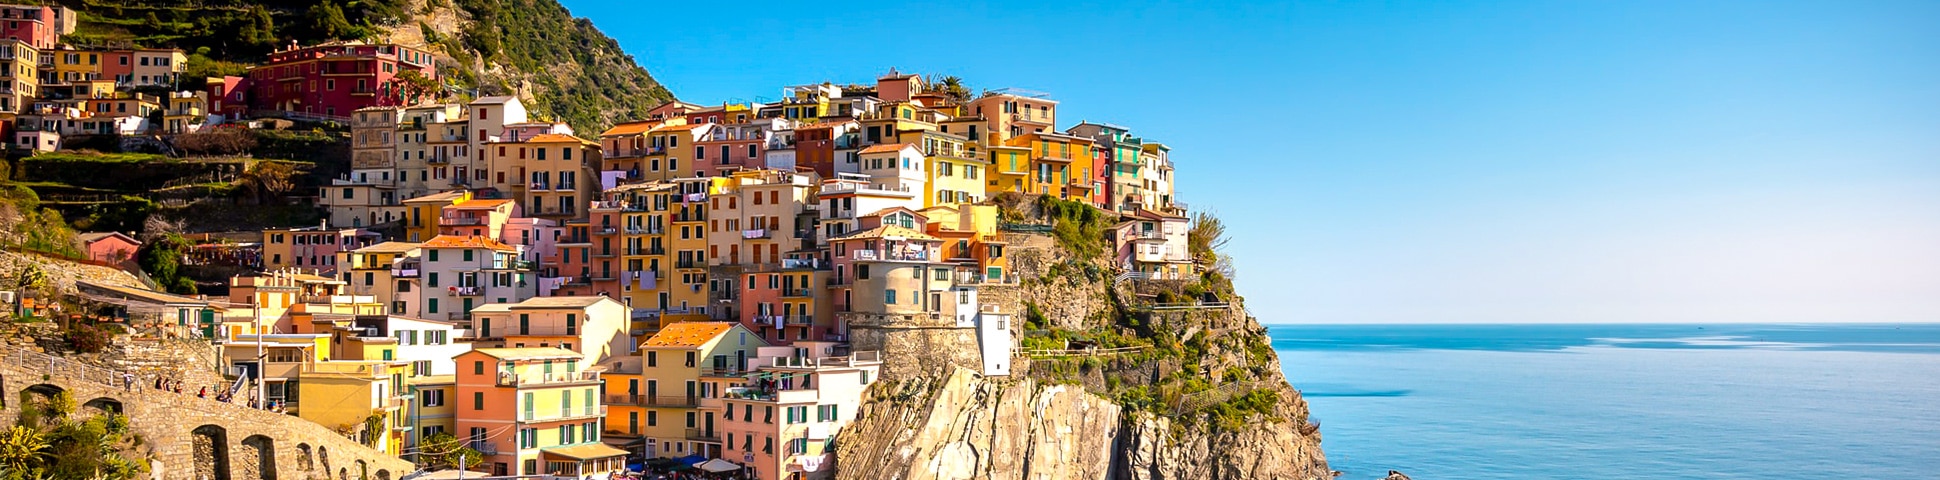 Colorful houses in small Italian village along Cinque Terre, Liguria